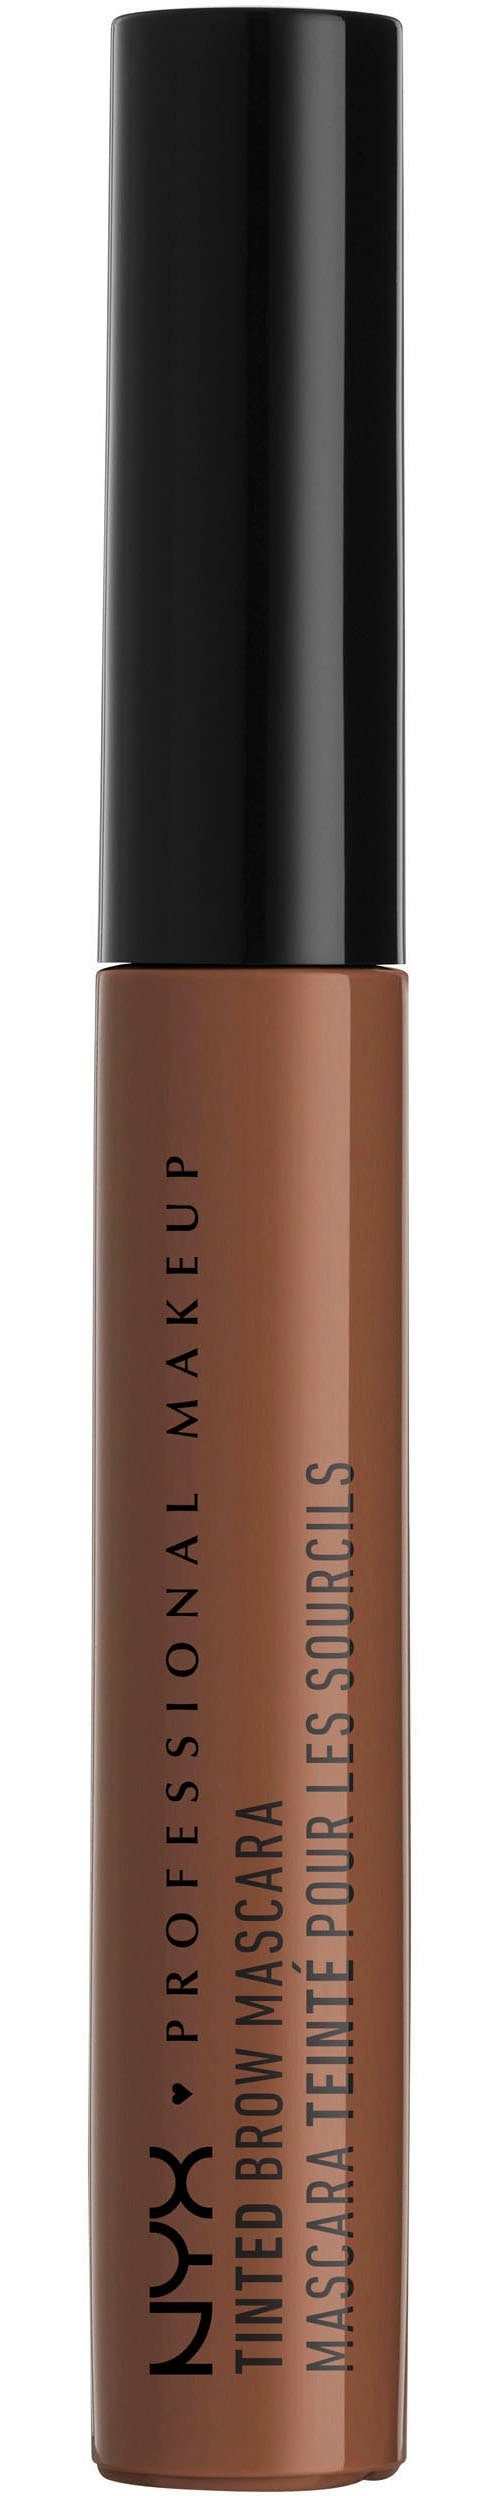 NYX Professional Epic Eyeliner chocolate Liner Ink Makeup